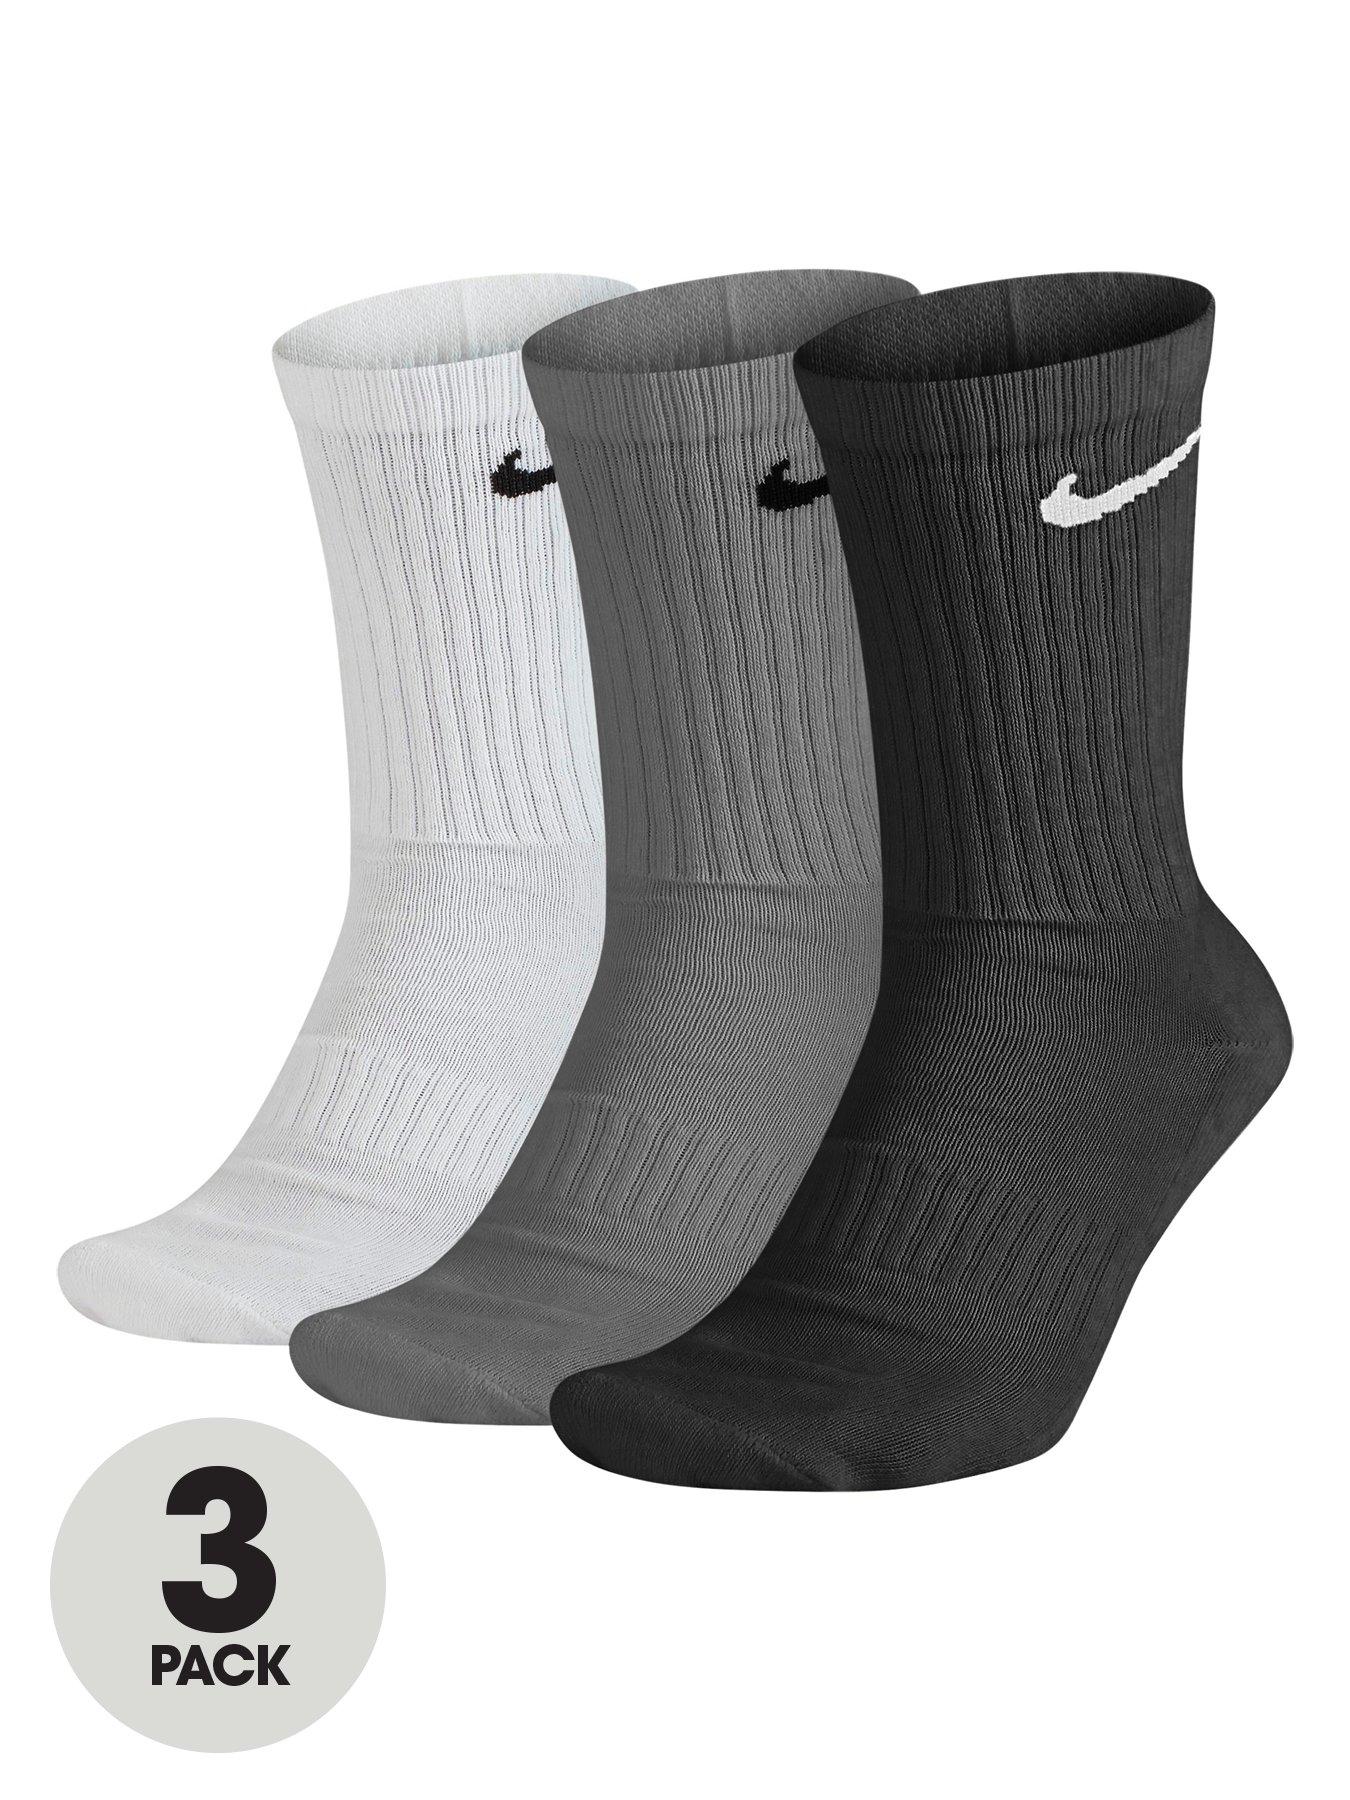 Womens Ankle Socks 5-Pack Running Athletic Socks Low Cut Cushioned Socks Sports 